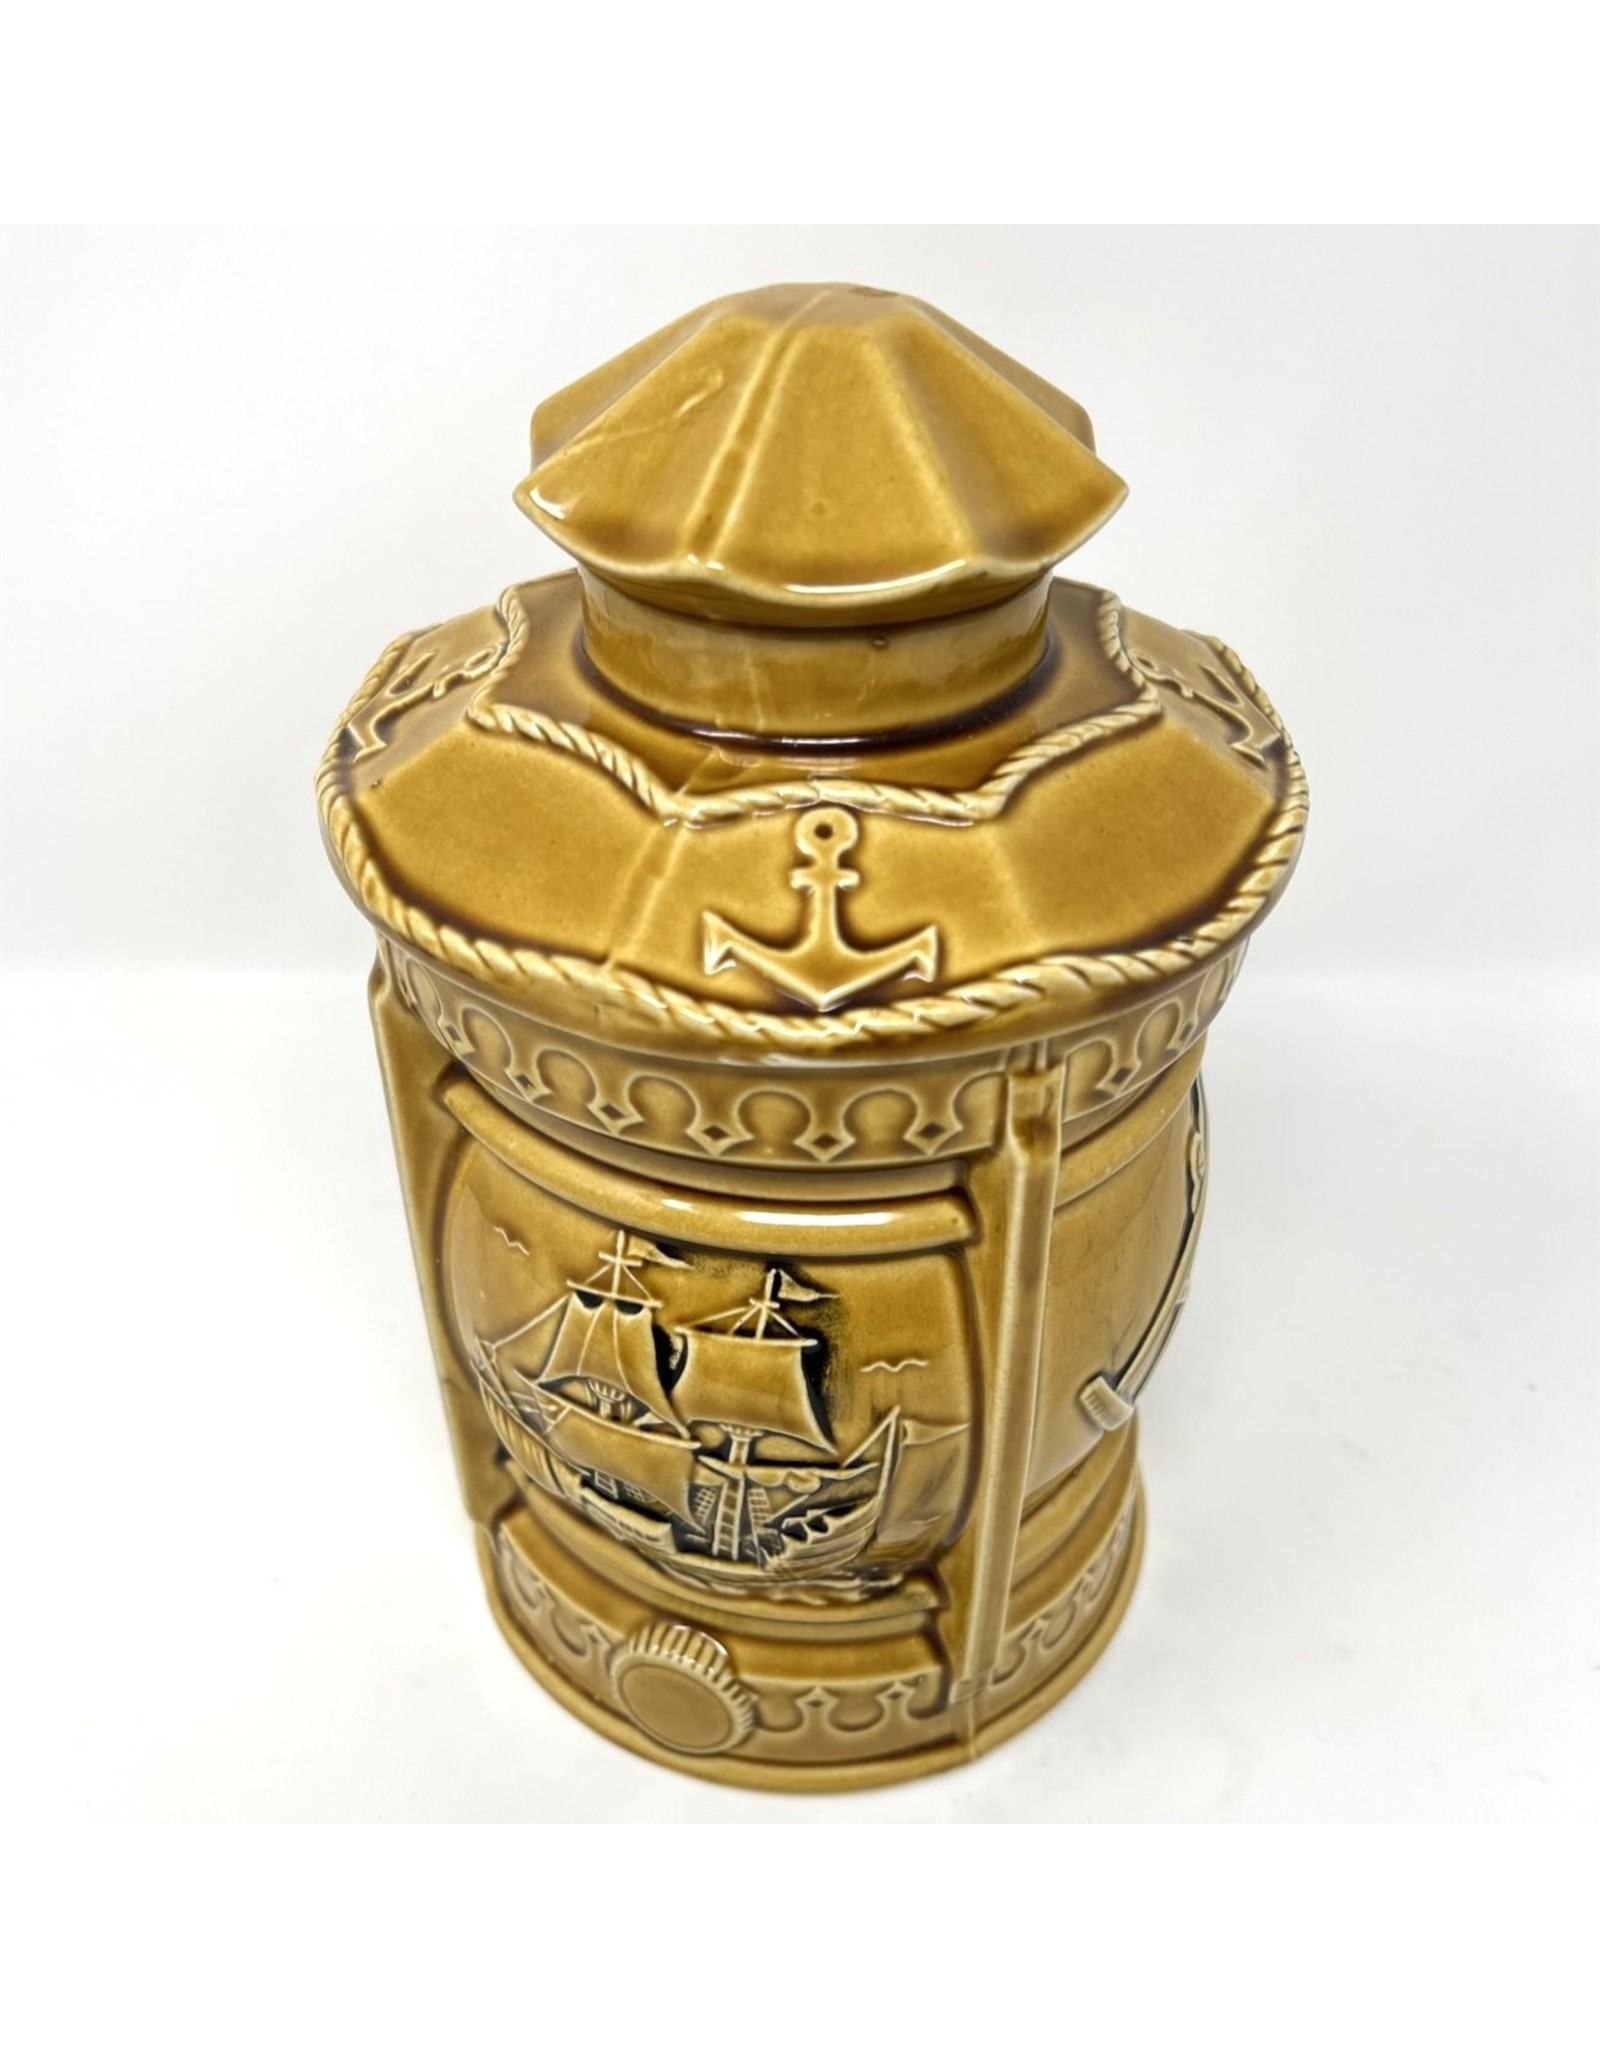 Cookie jar - 1950's Enesco Japanese pottery, nautical theme, brown glaze